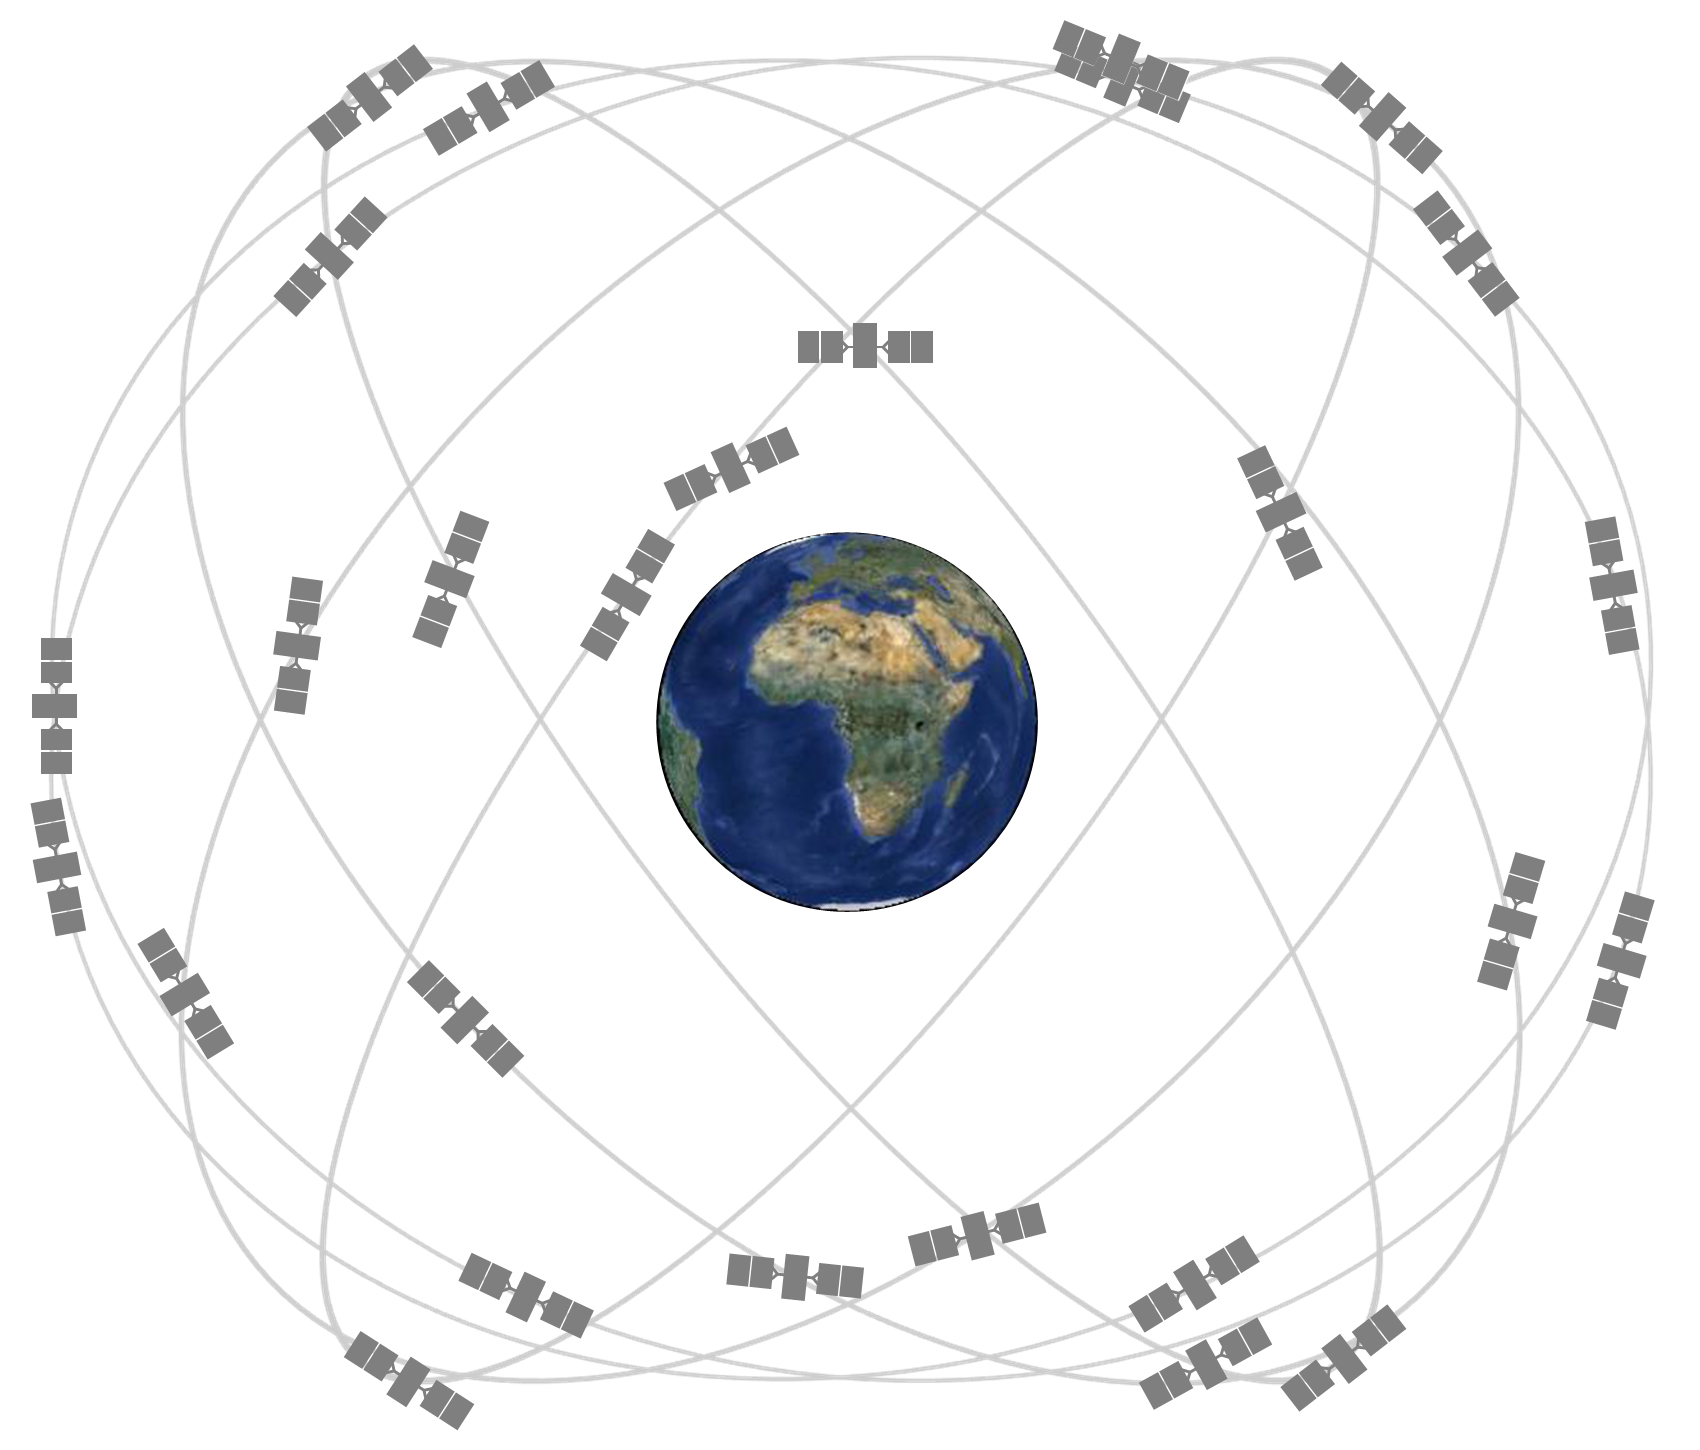 gps satellite triangulation